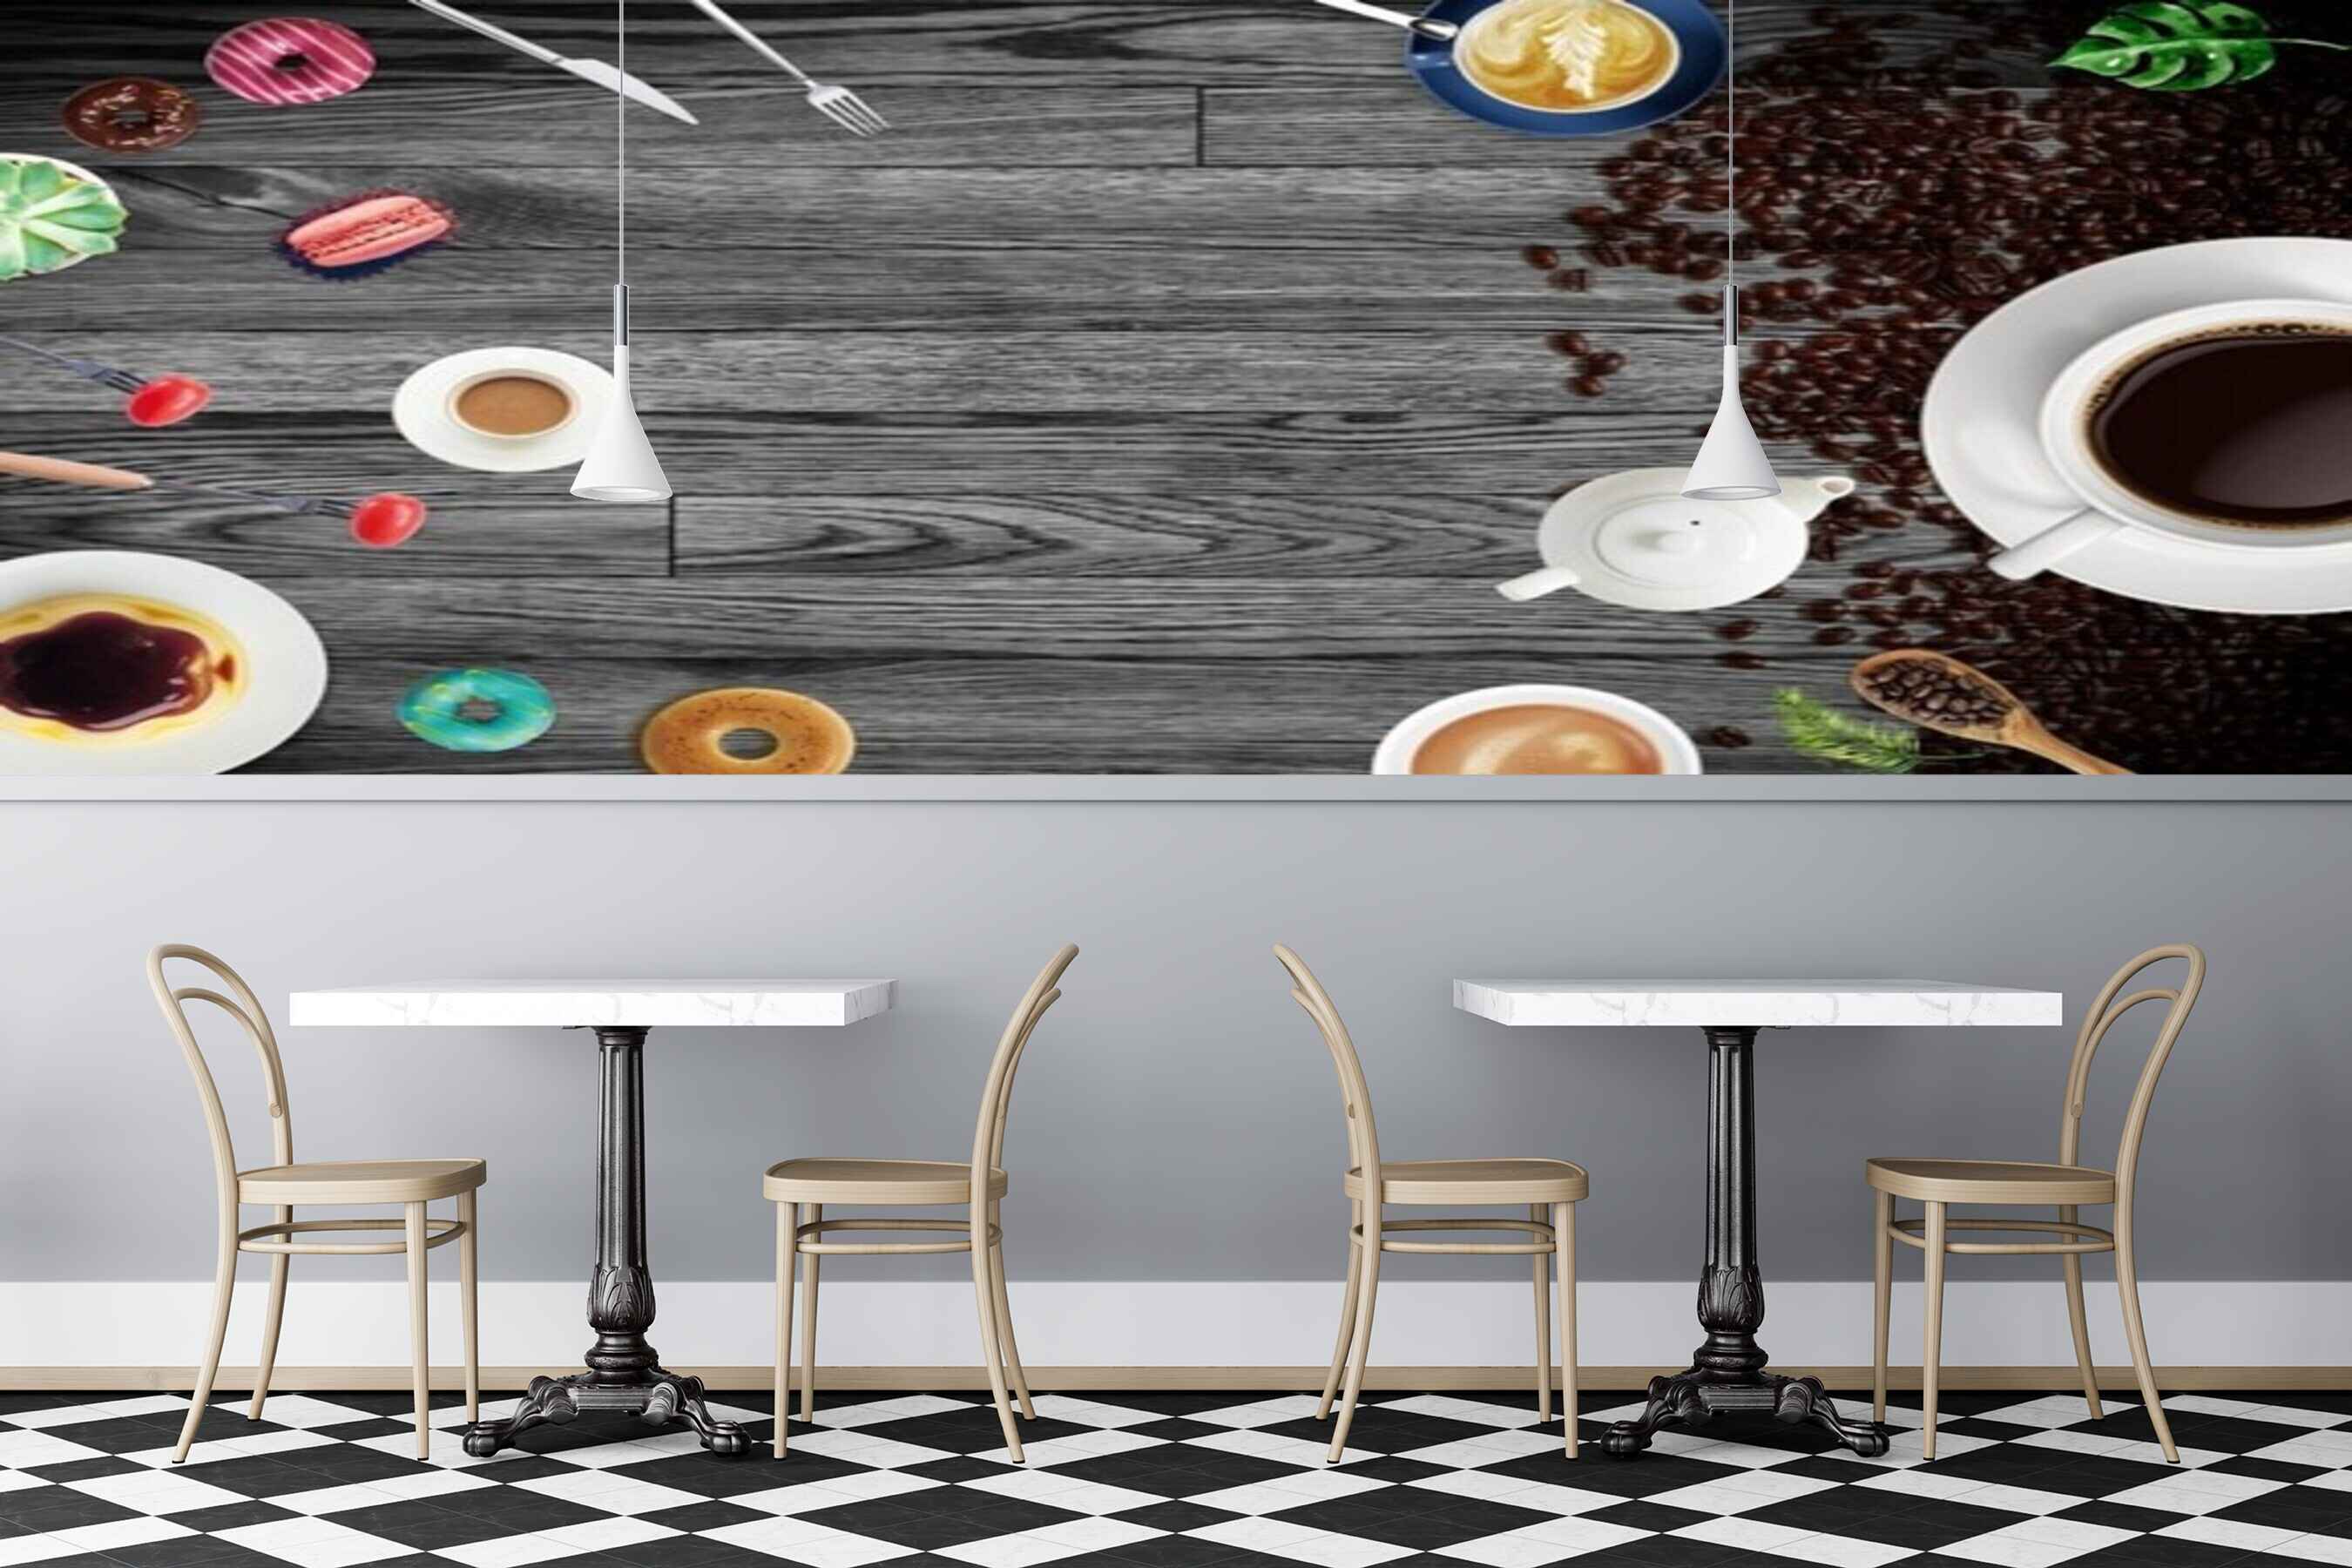 Avikalp MWZ3035 Cup Saucer Coffee Beans Donuts Candies HD Wallpaper for Cafe Restaurant